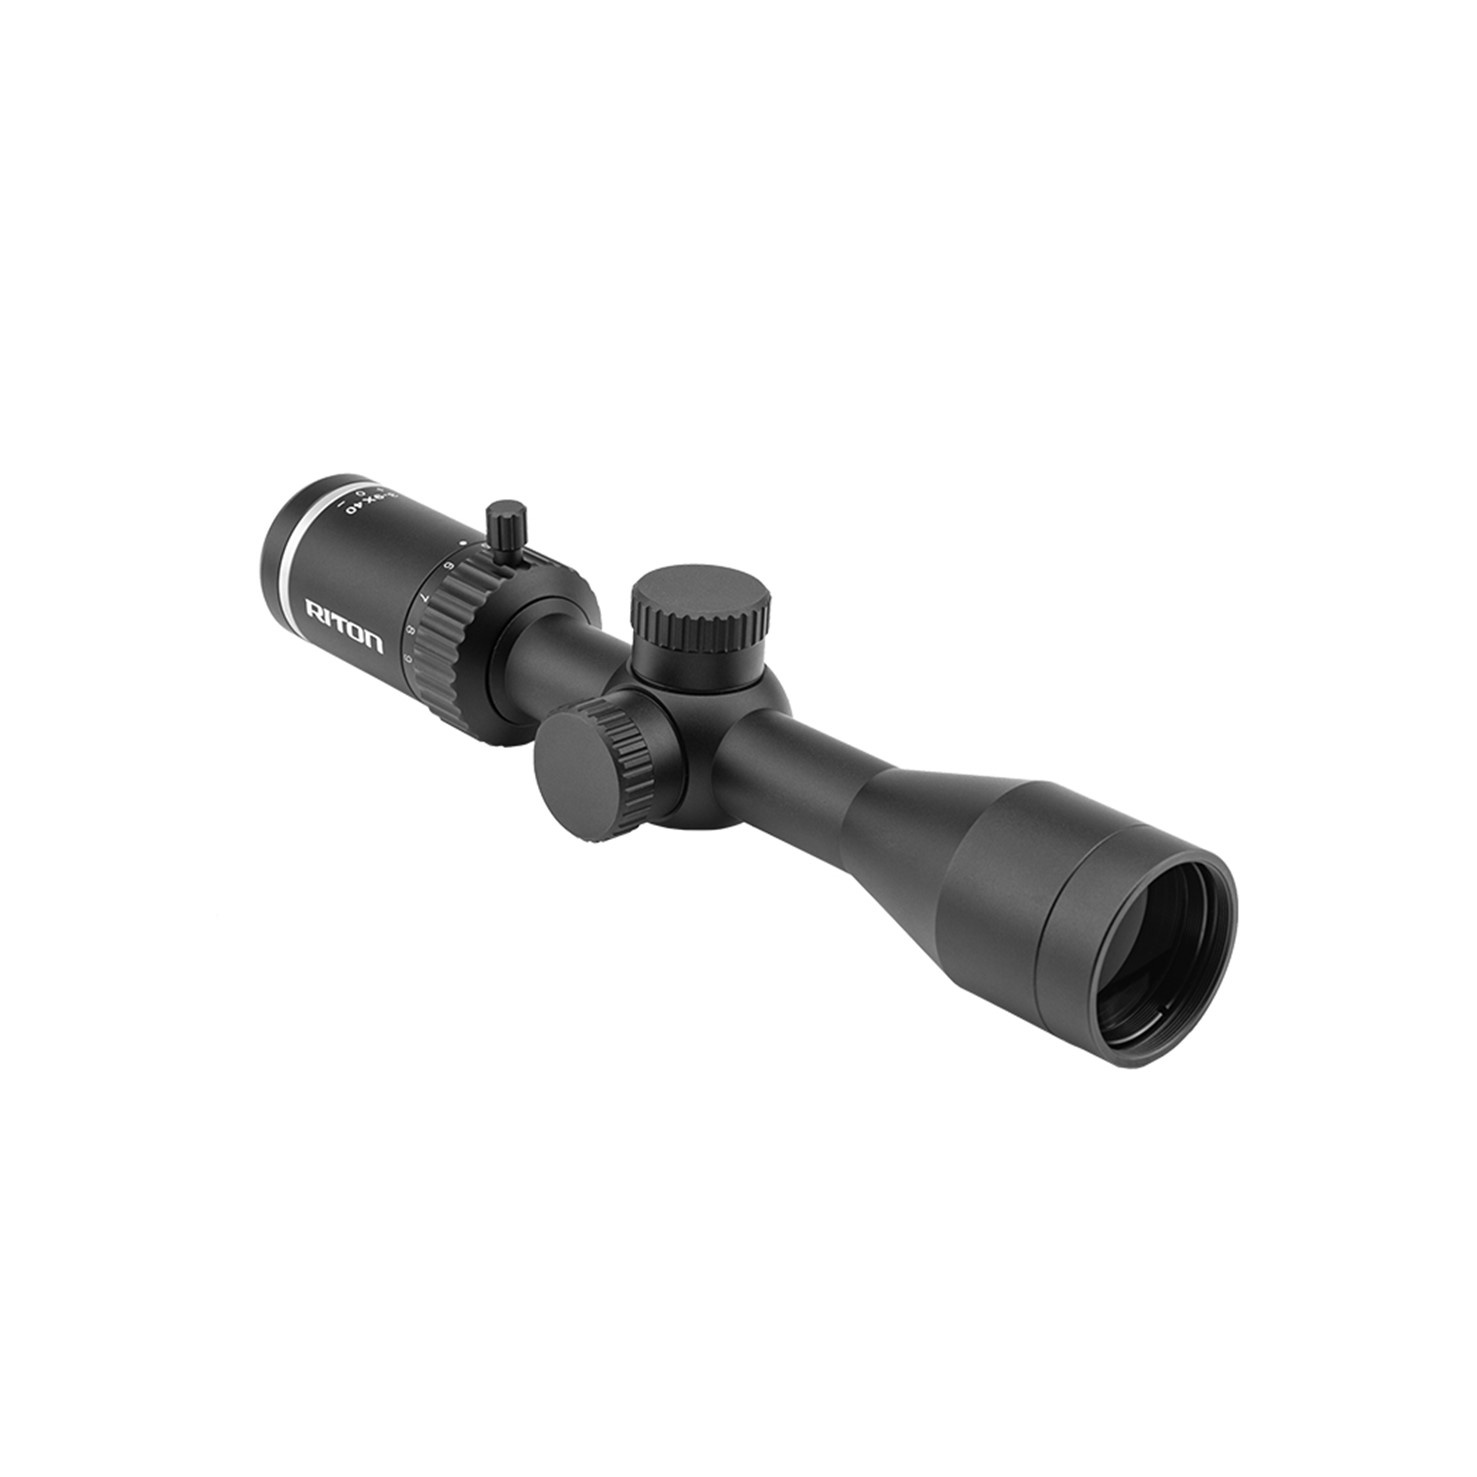 Riton Optics 1 Primal 3-9x40 LB Rifle Scope